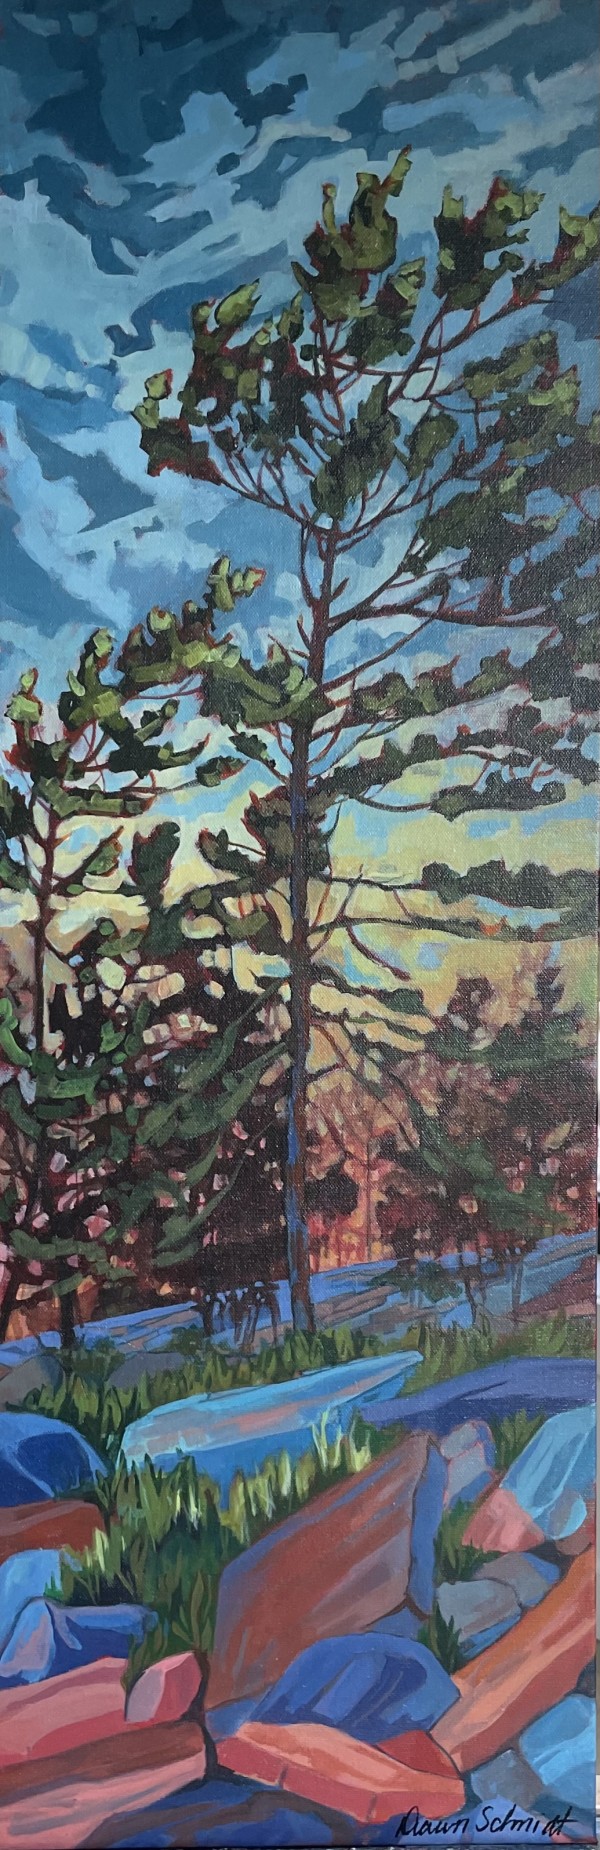 In-tree-guing Solitude by Dawn Schmidt